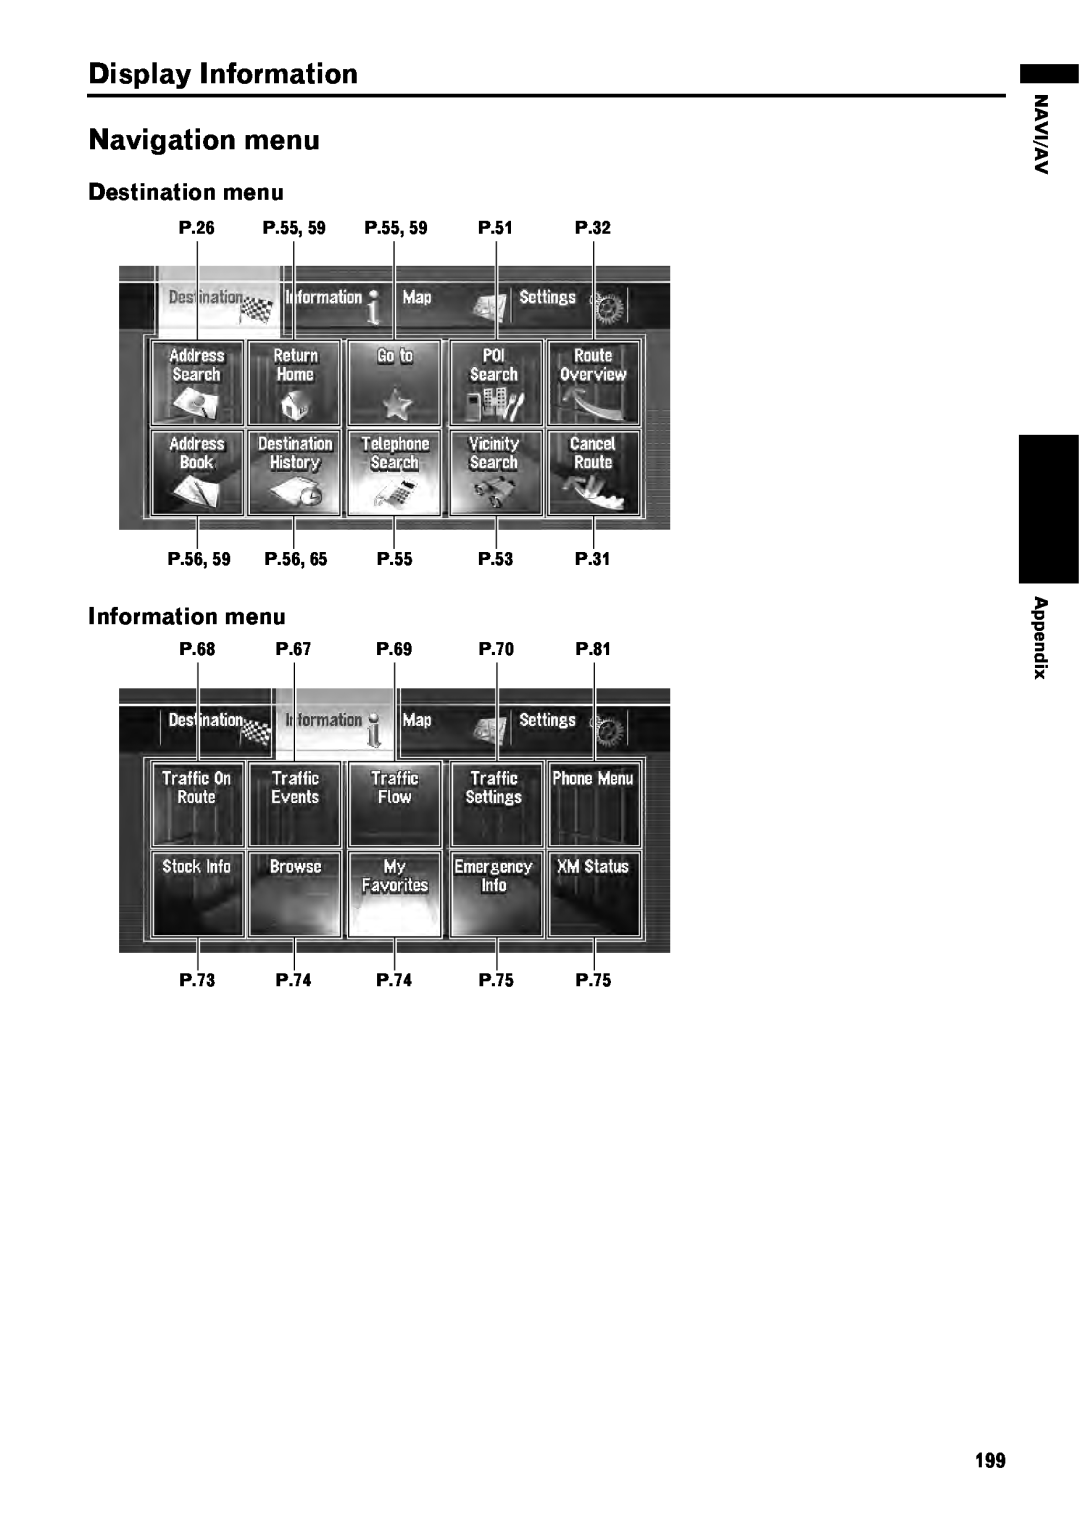 Pioneer AVIC-Z1 operation manual Display Information Navigation menu, Destination menu, Information menu 